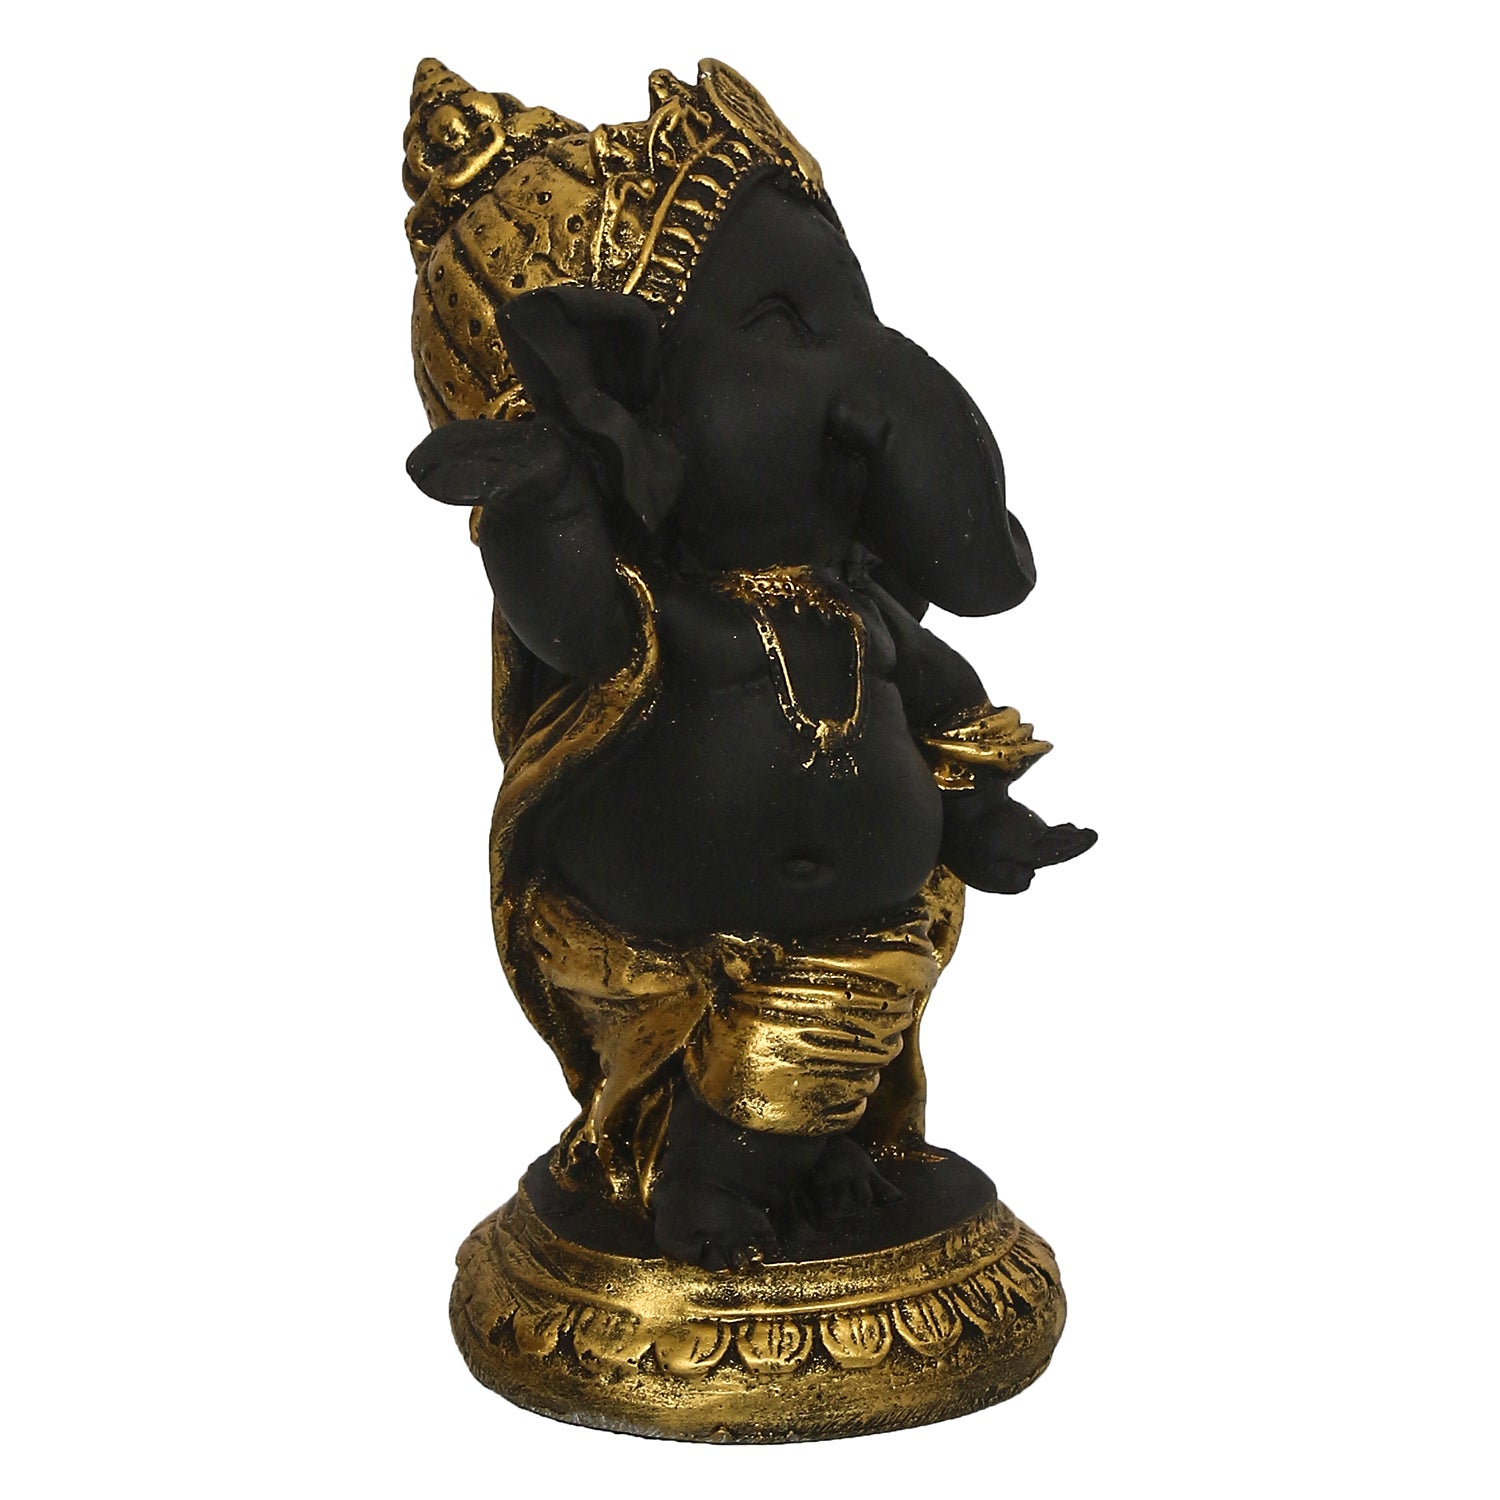 Golden And Black Lord Ganesha Idol In Dancing Avatar Decorative Showpiece 4